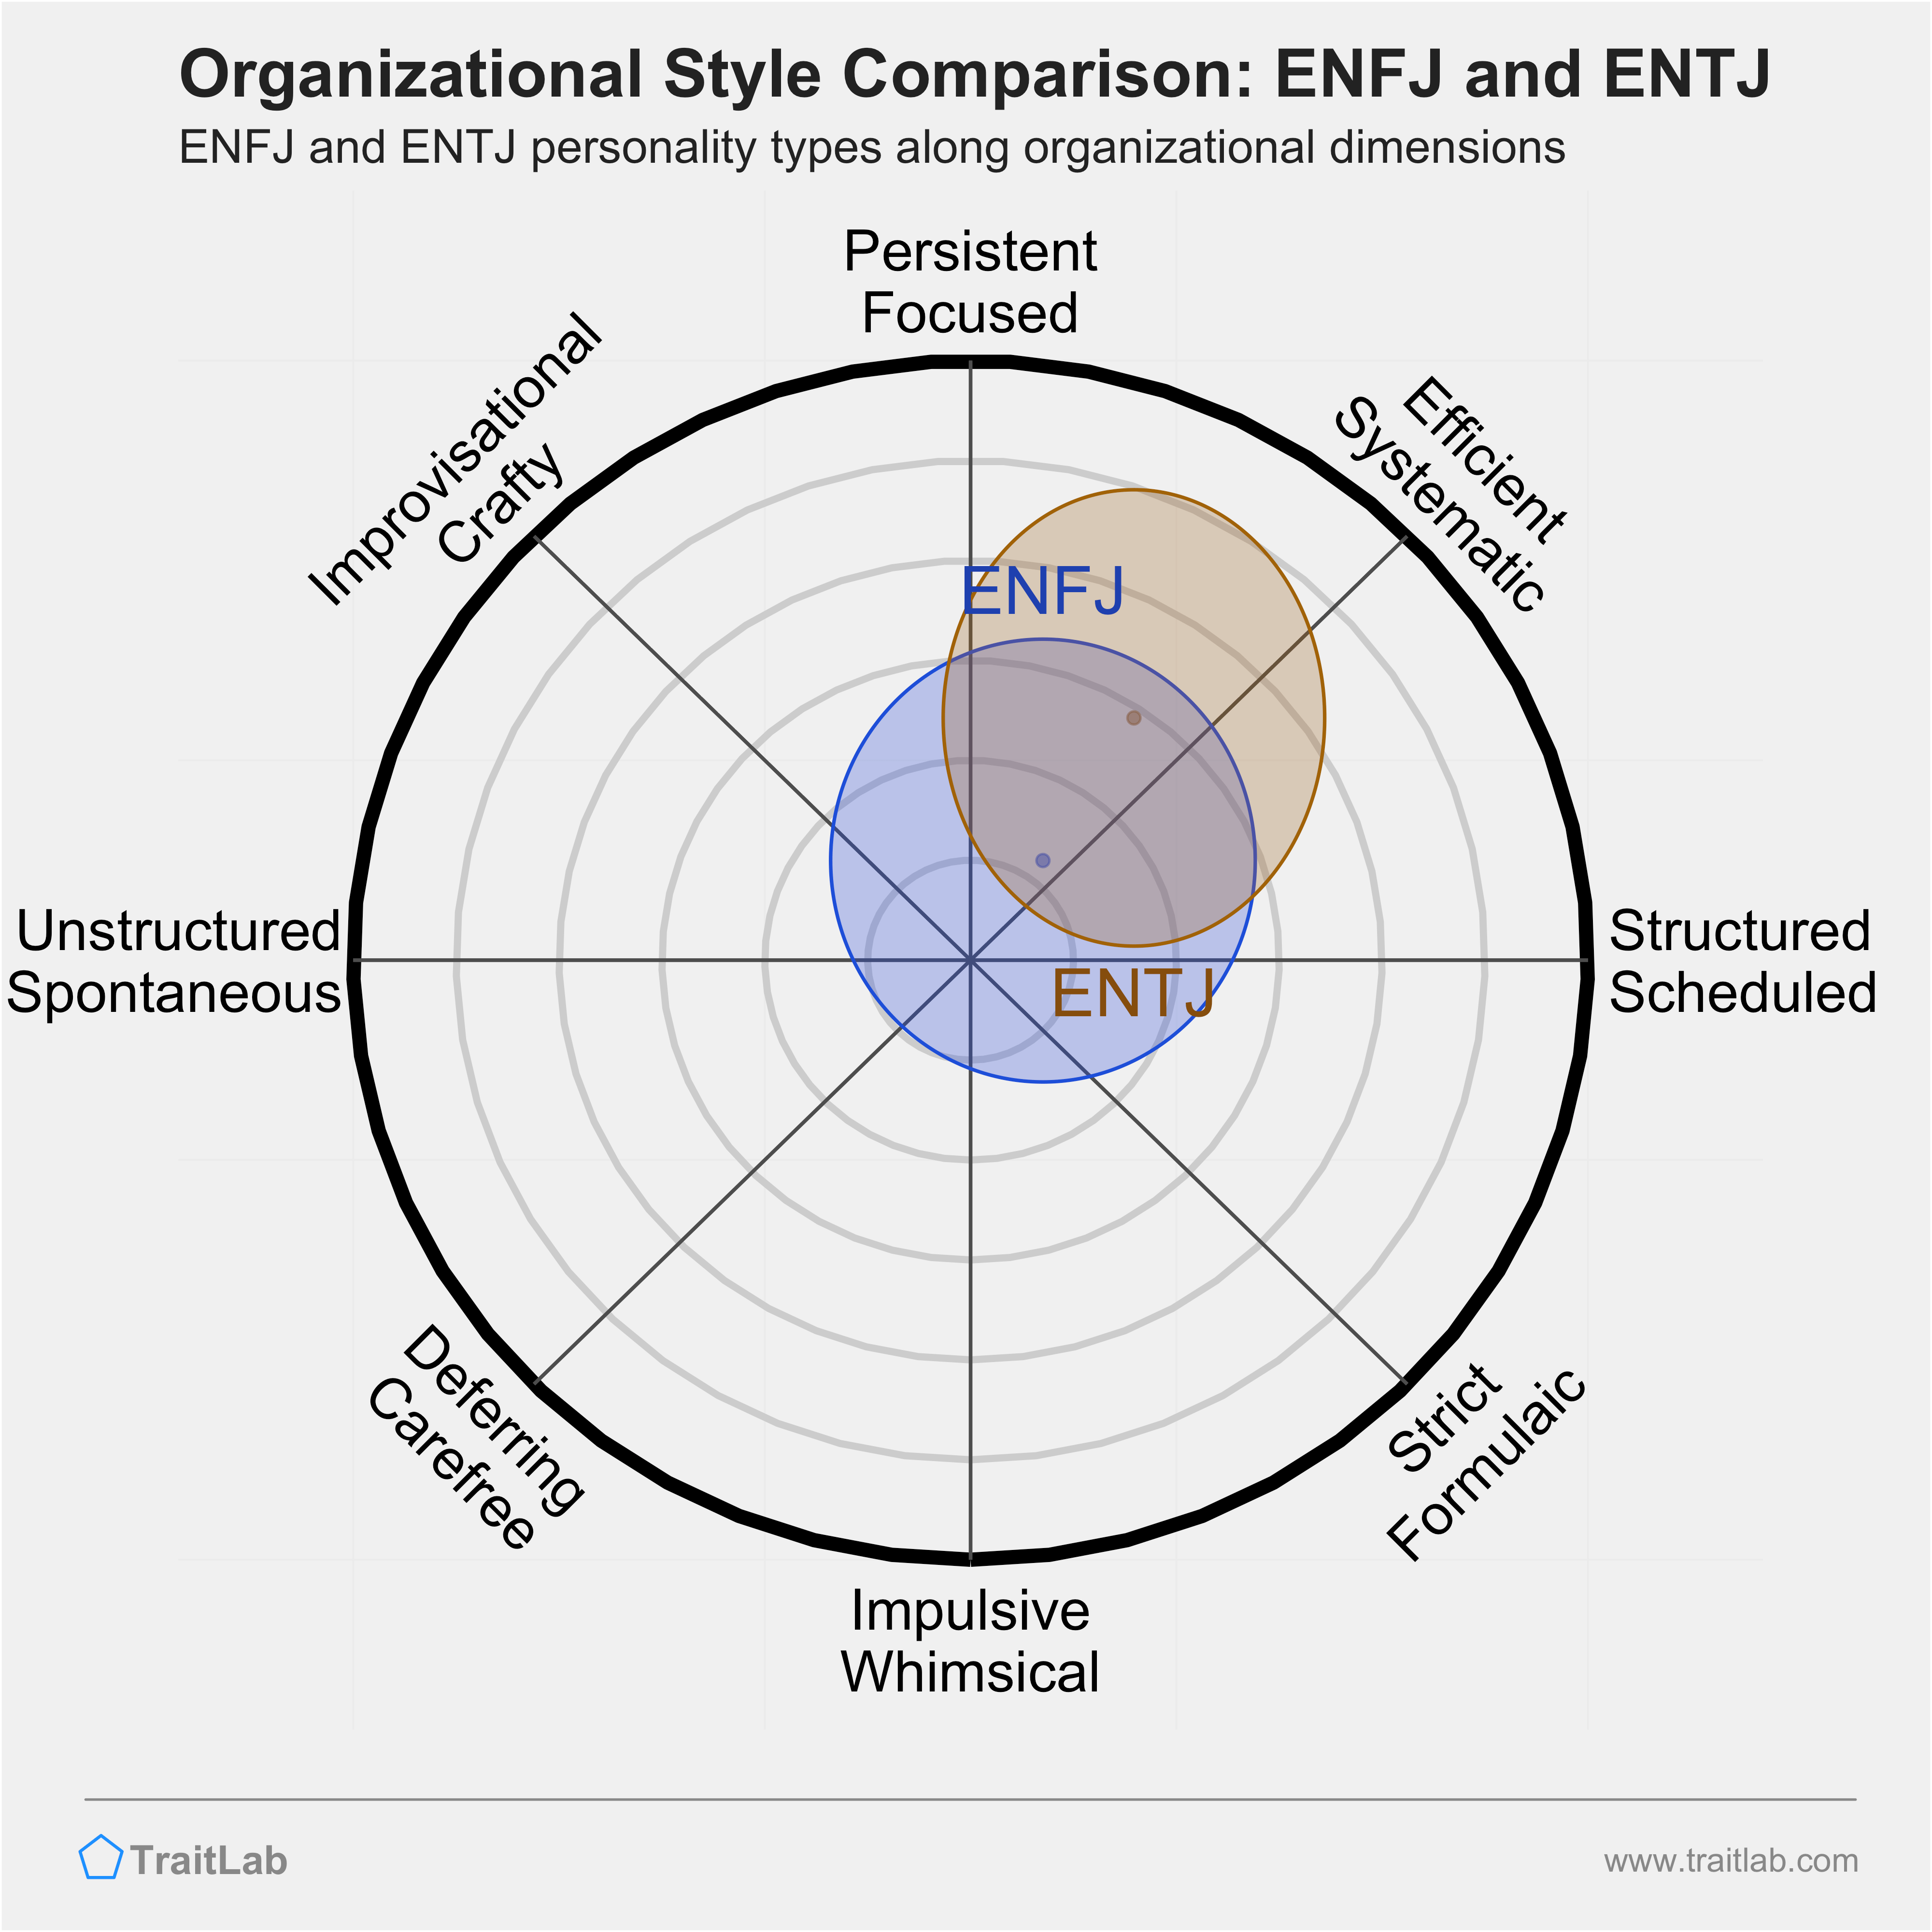 ENFJ and ENTJ comparison across organizational dimensions